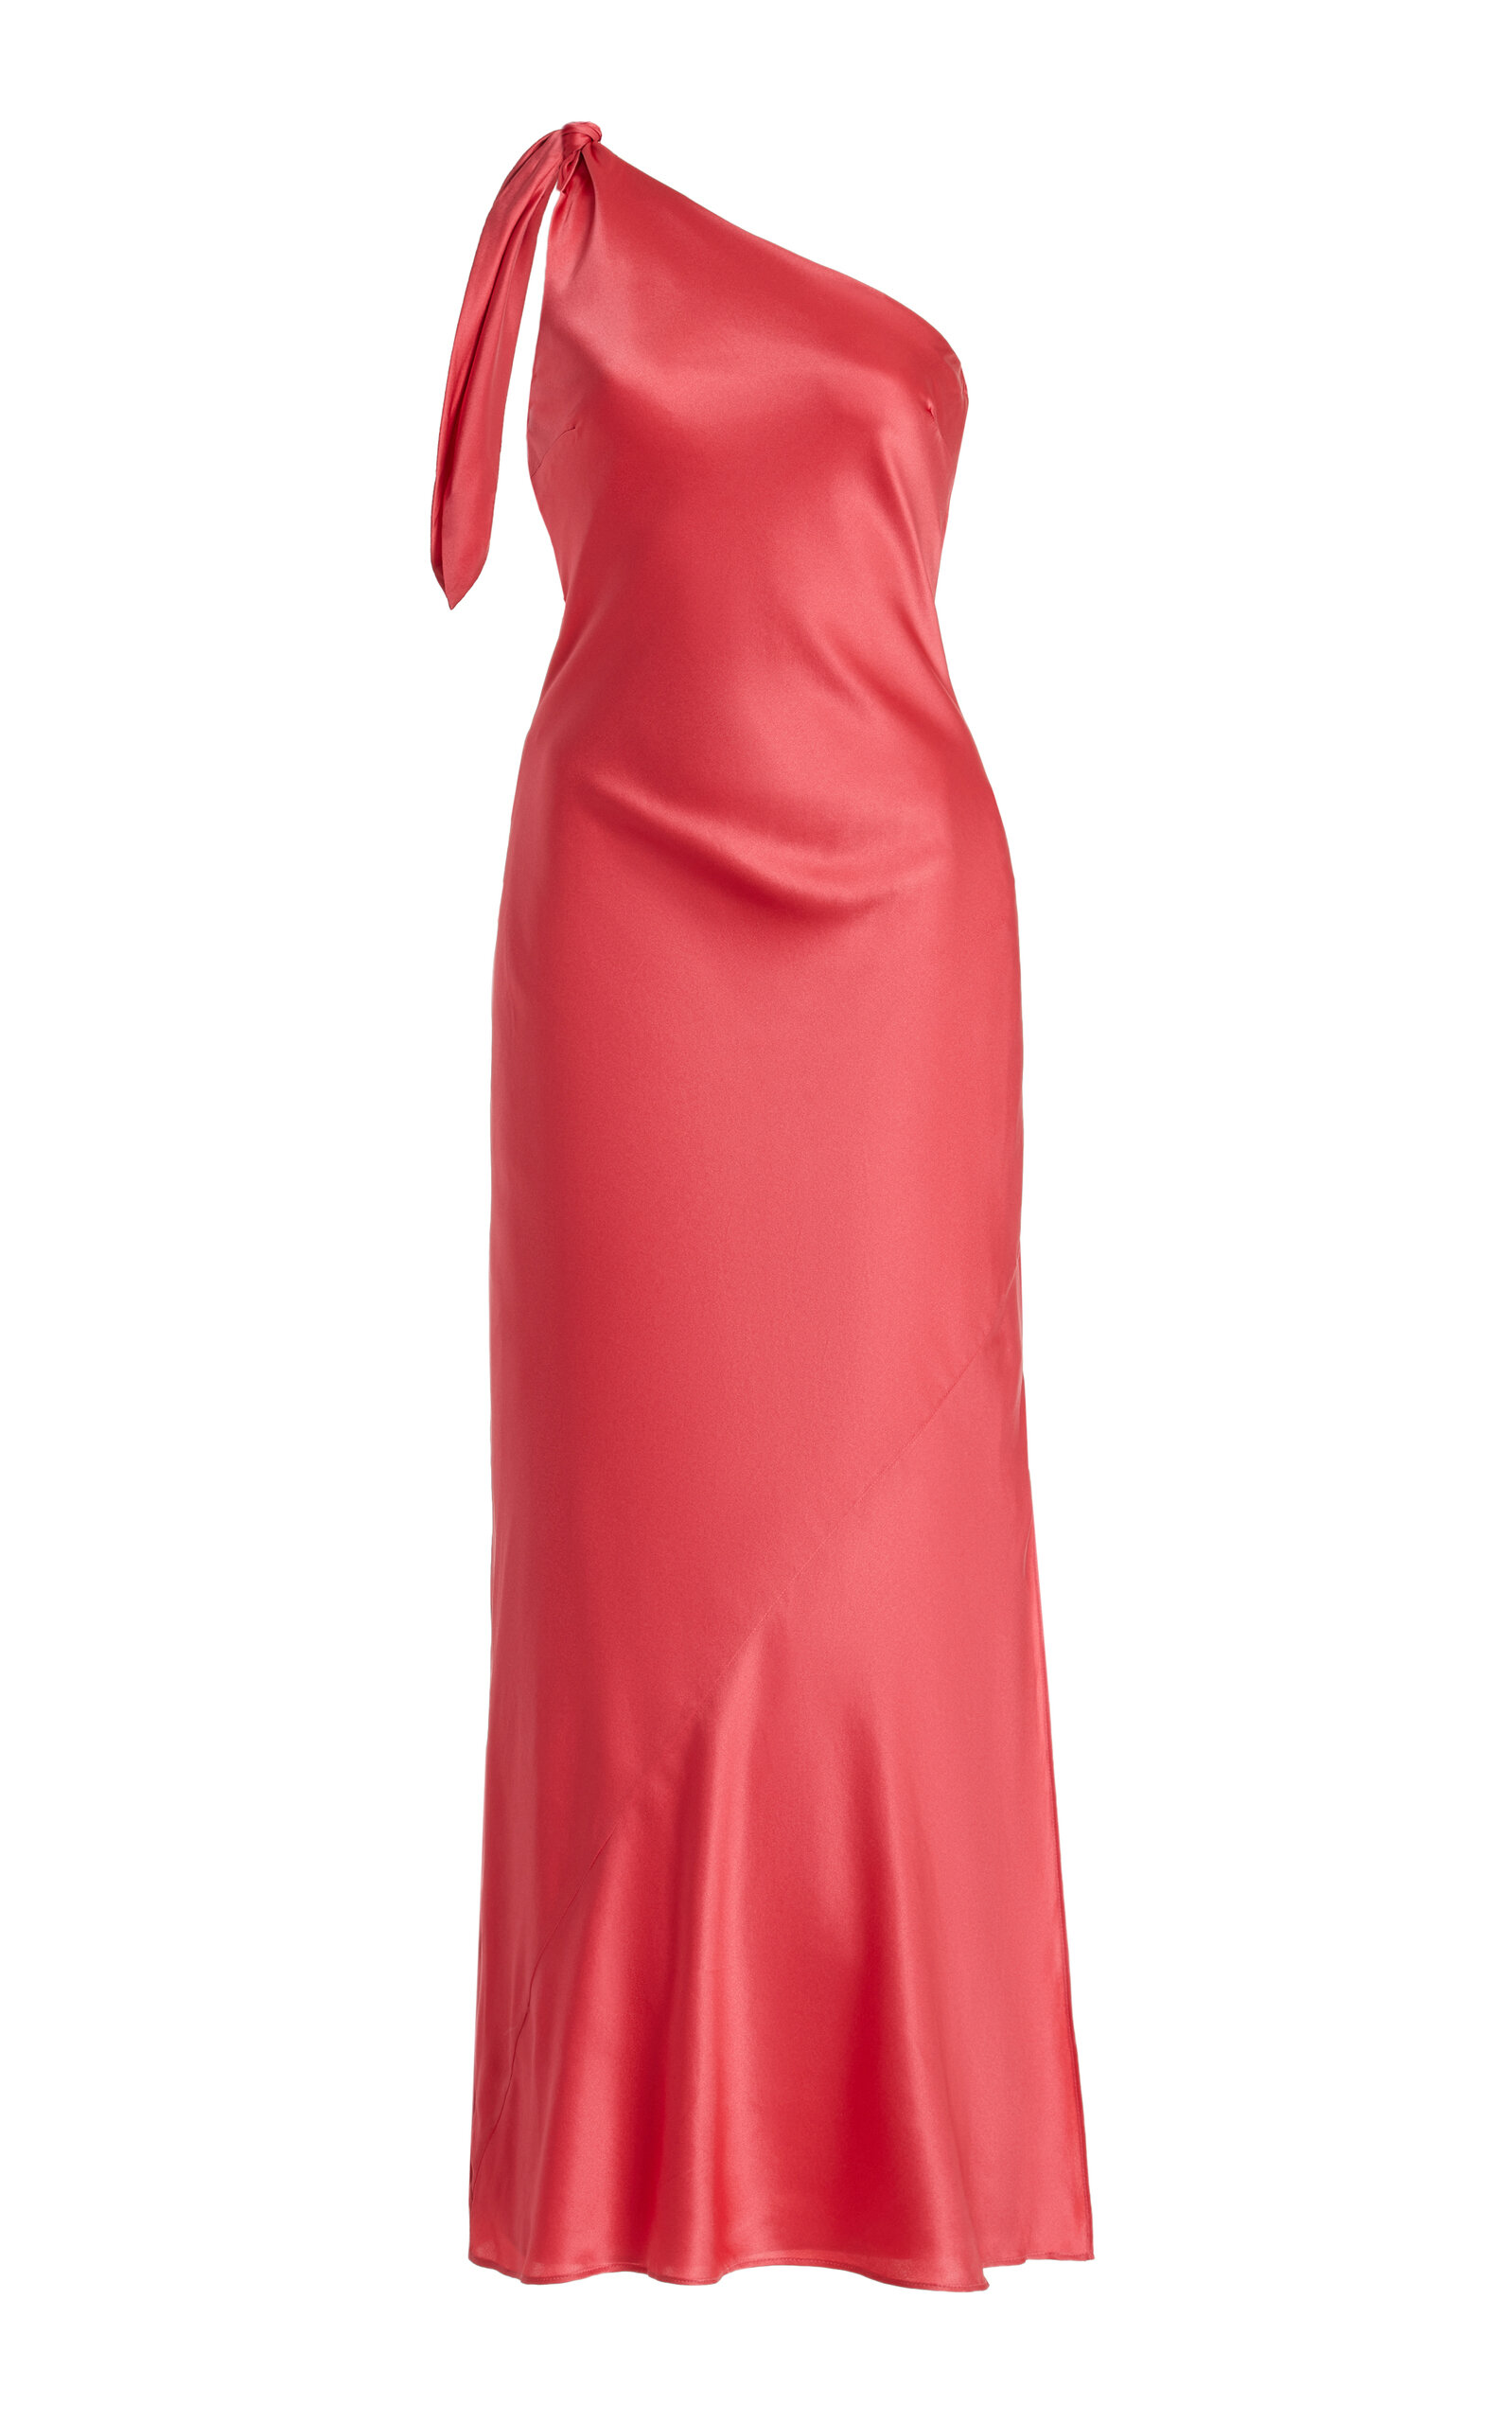 Cult Gaia - Kamila Asymmetric Stretch Silk Maxi Dress - Pink - L - Moda Operandi